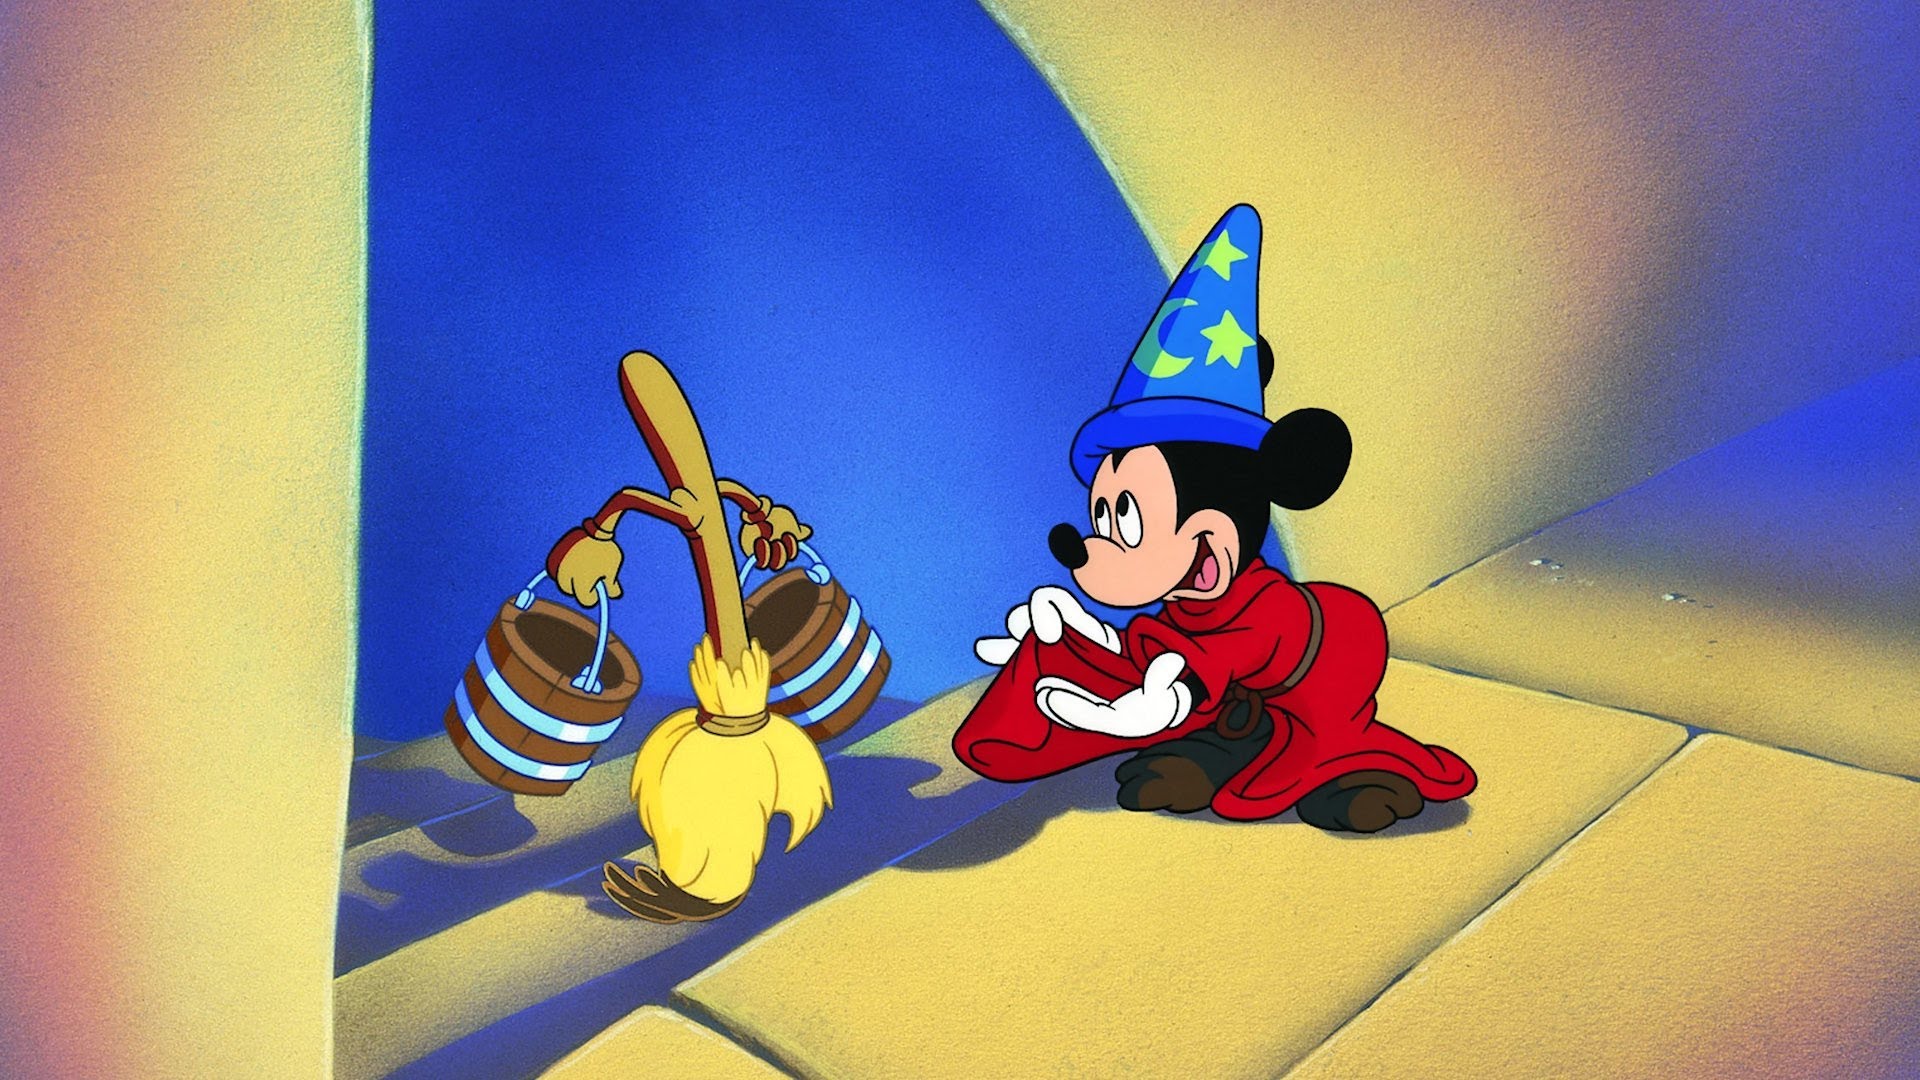 Disney's Fantasia (1940) - Golden Age of Animation - Yesterday's Joe